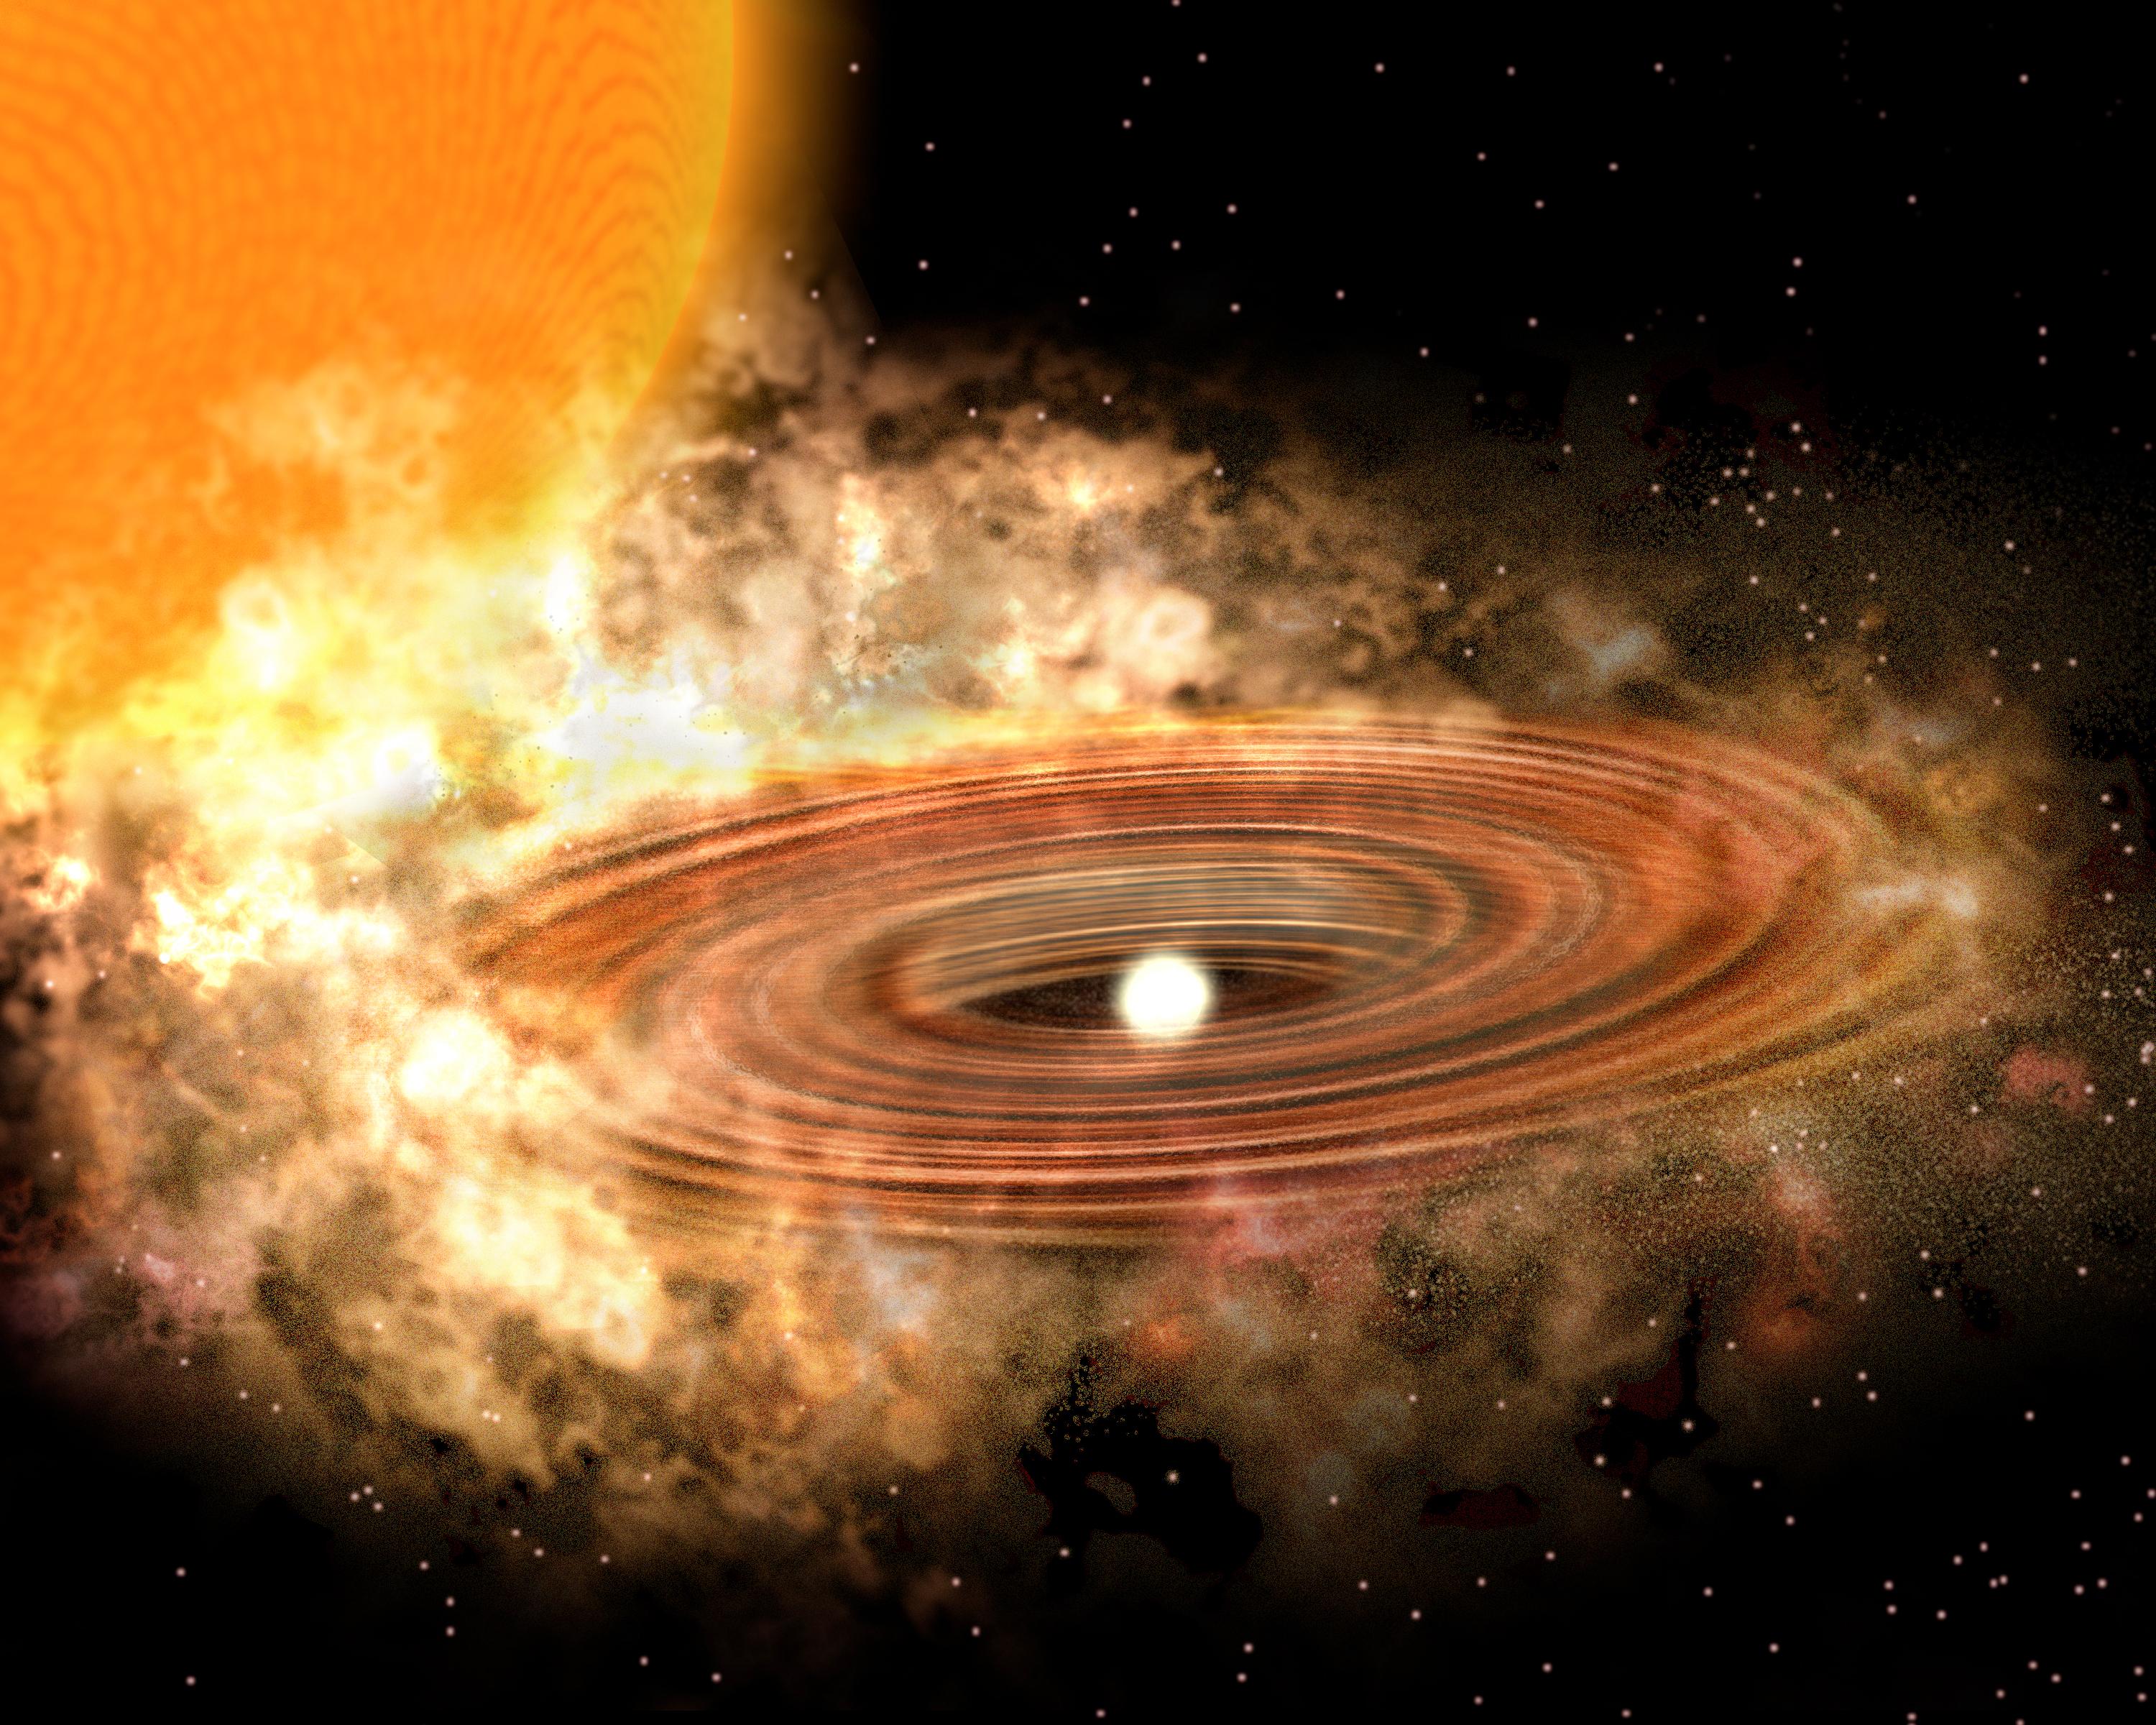 Accretion Disk Around Binary Star System WZ Sge Spitzer Space